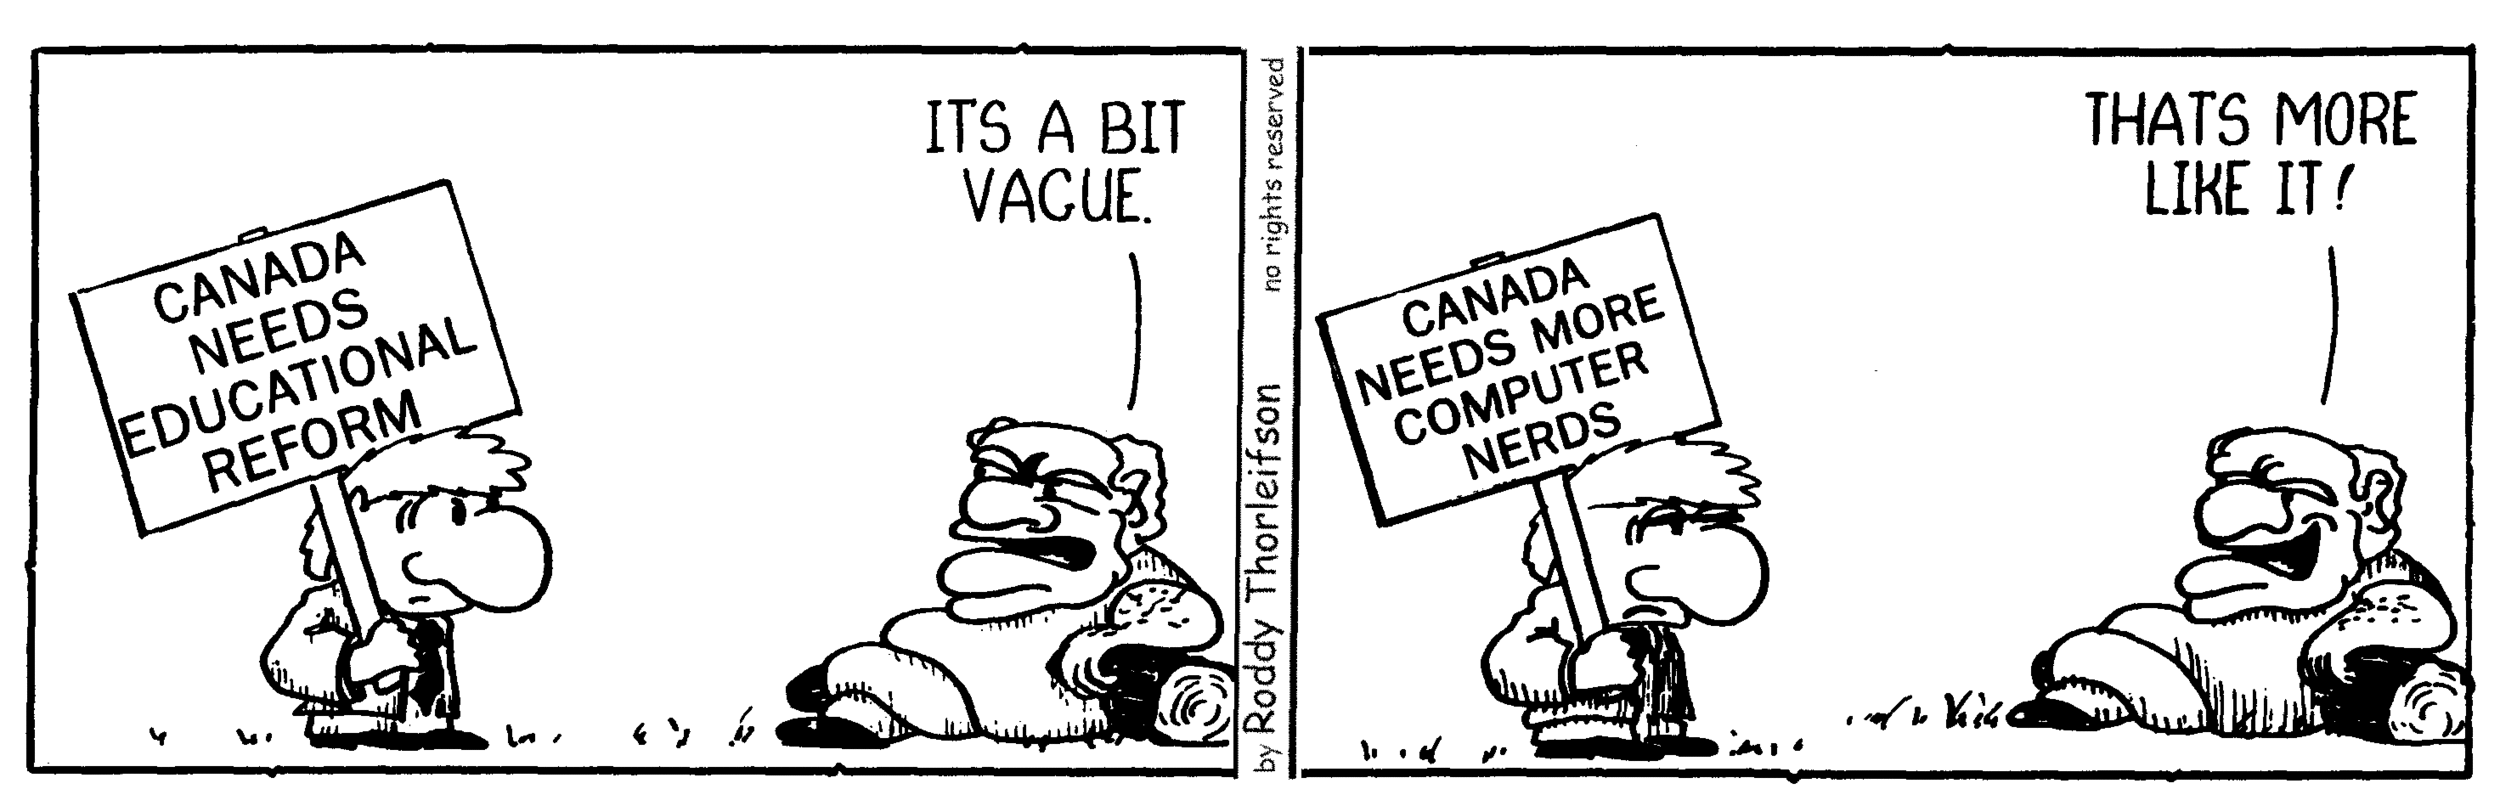 free cartoon Canada Canadian educational reform computer nerds